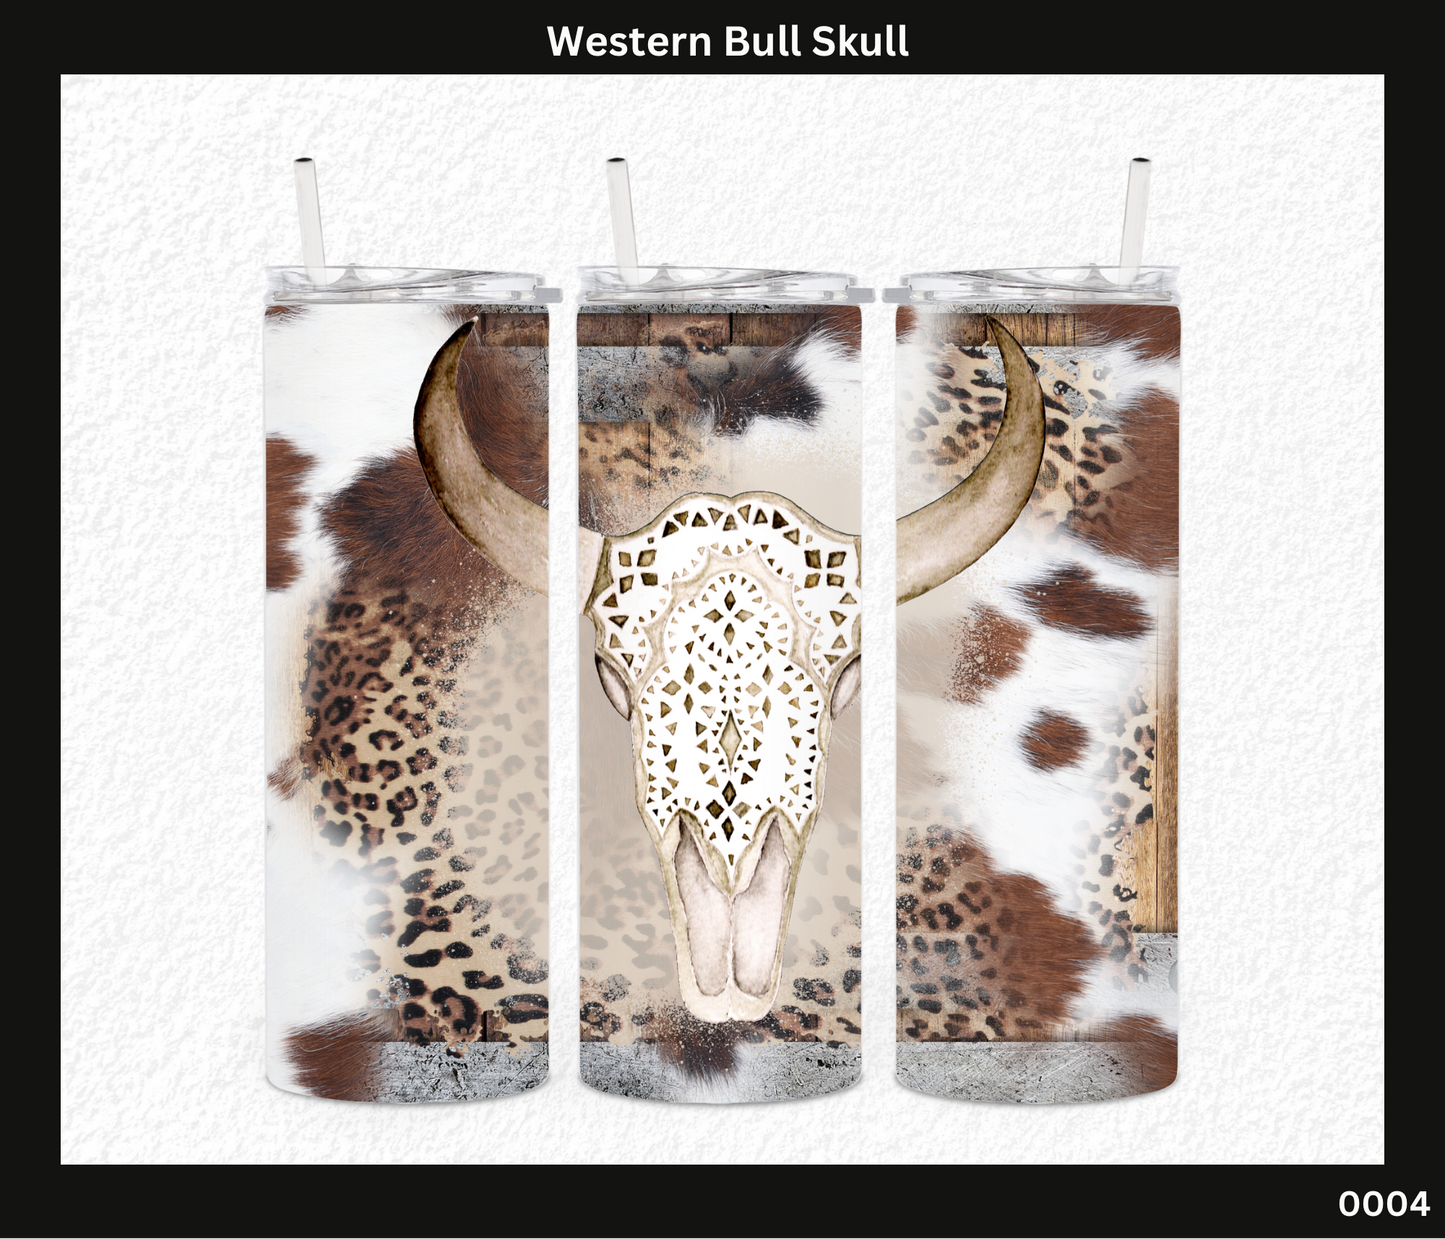 Western Bull Skull